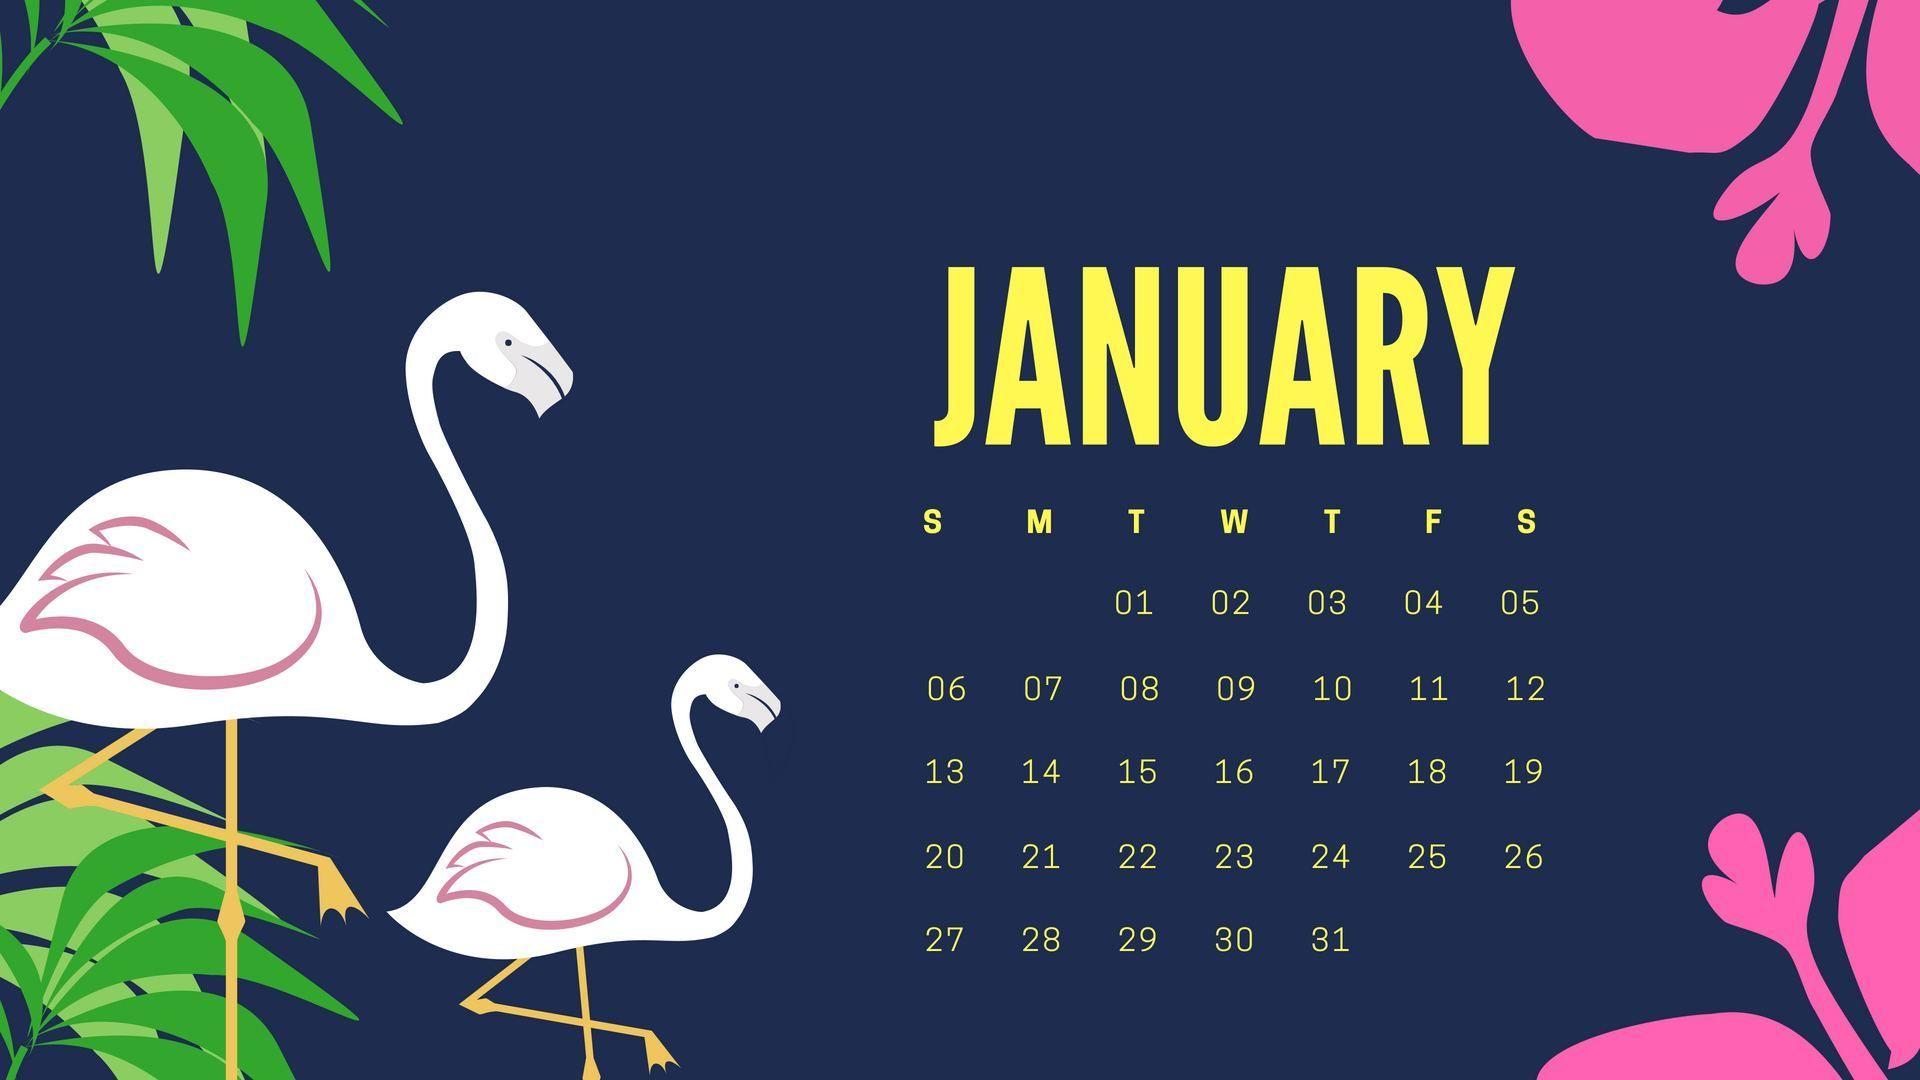 january 2019 calendar wallpaper Calendars in 2018